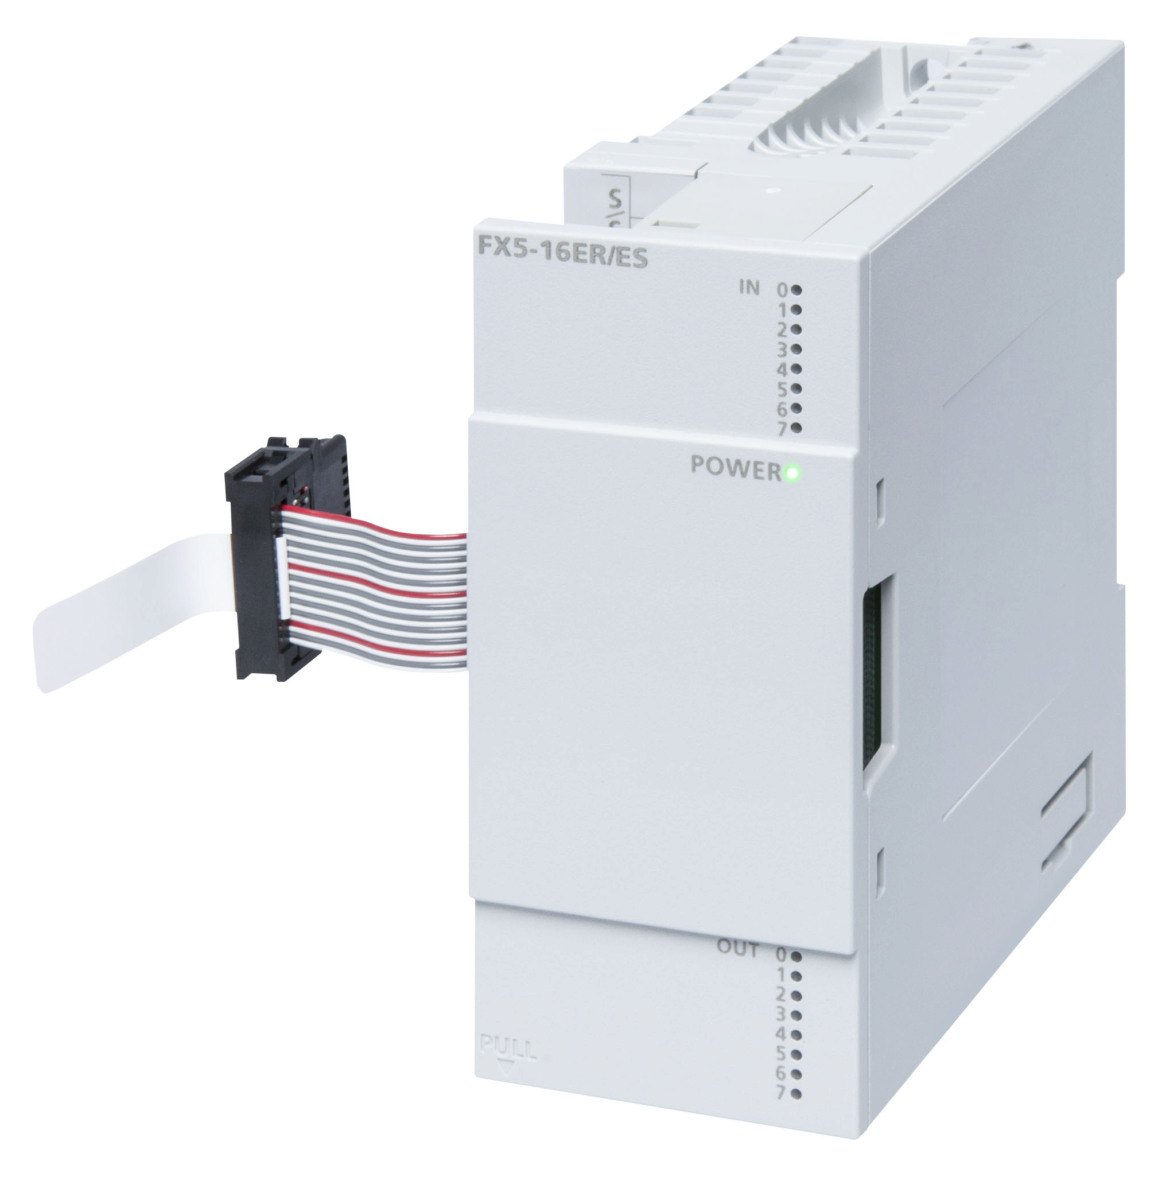 FX5-16ER/ES | Digital I/O Module | PLC Compact | PLC | Catalogue